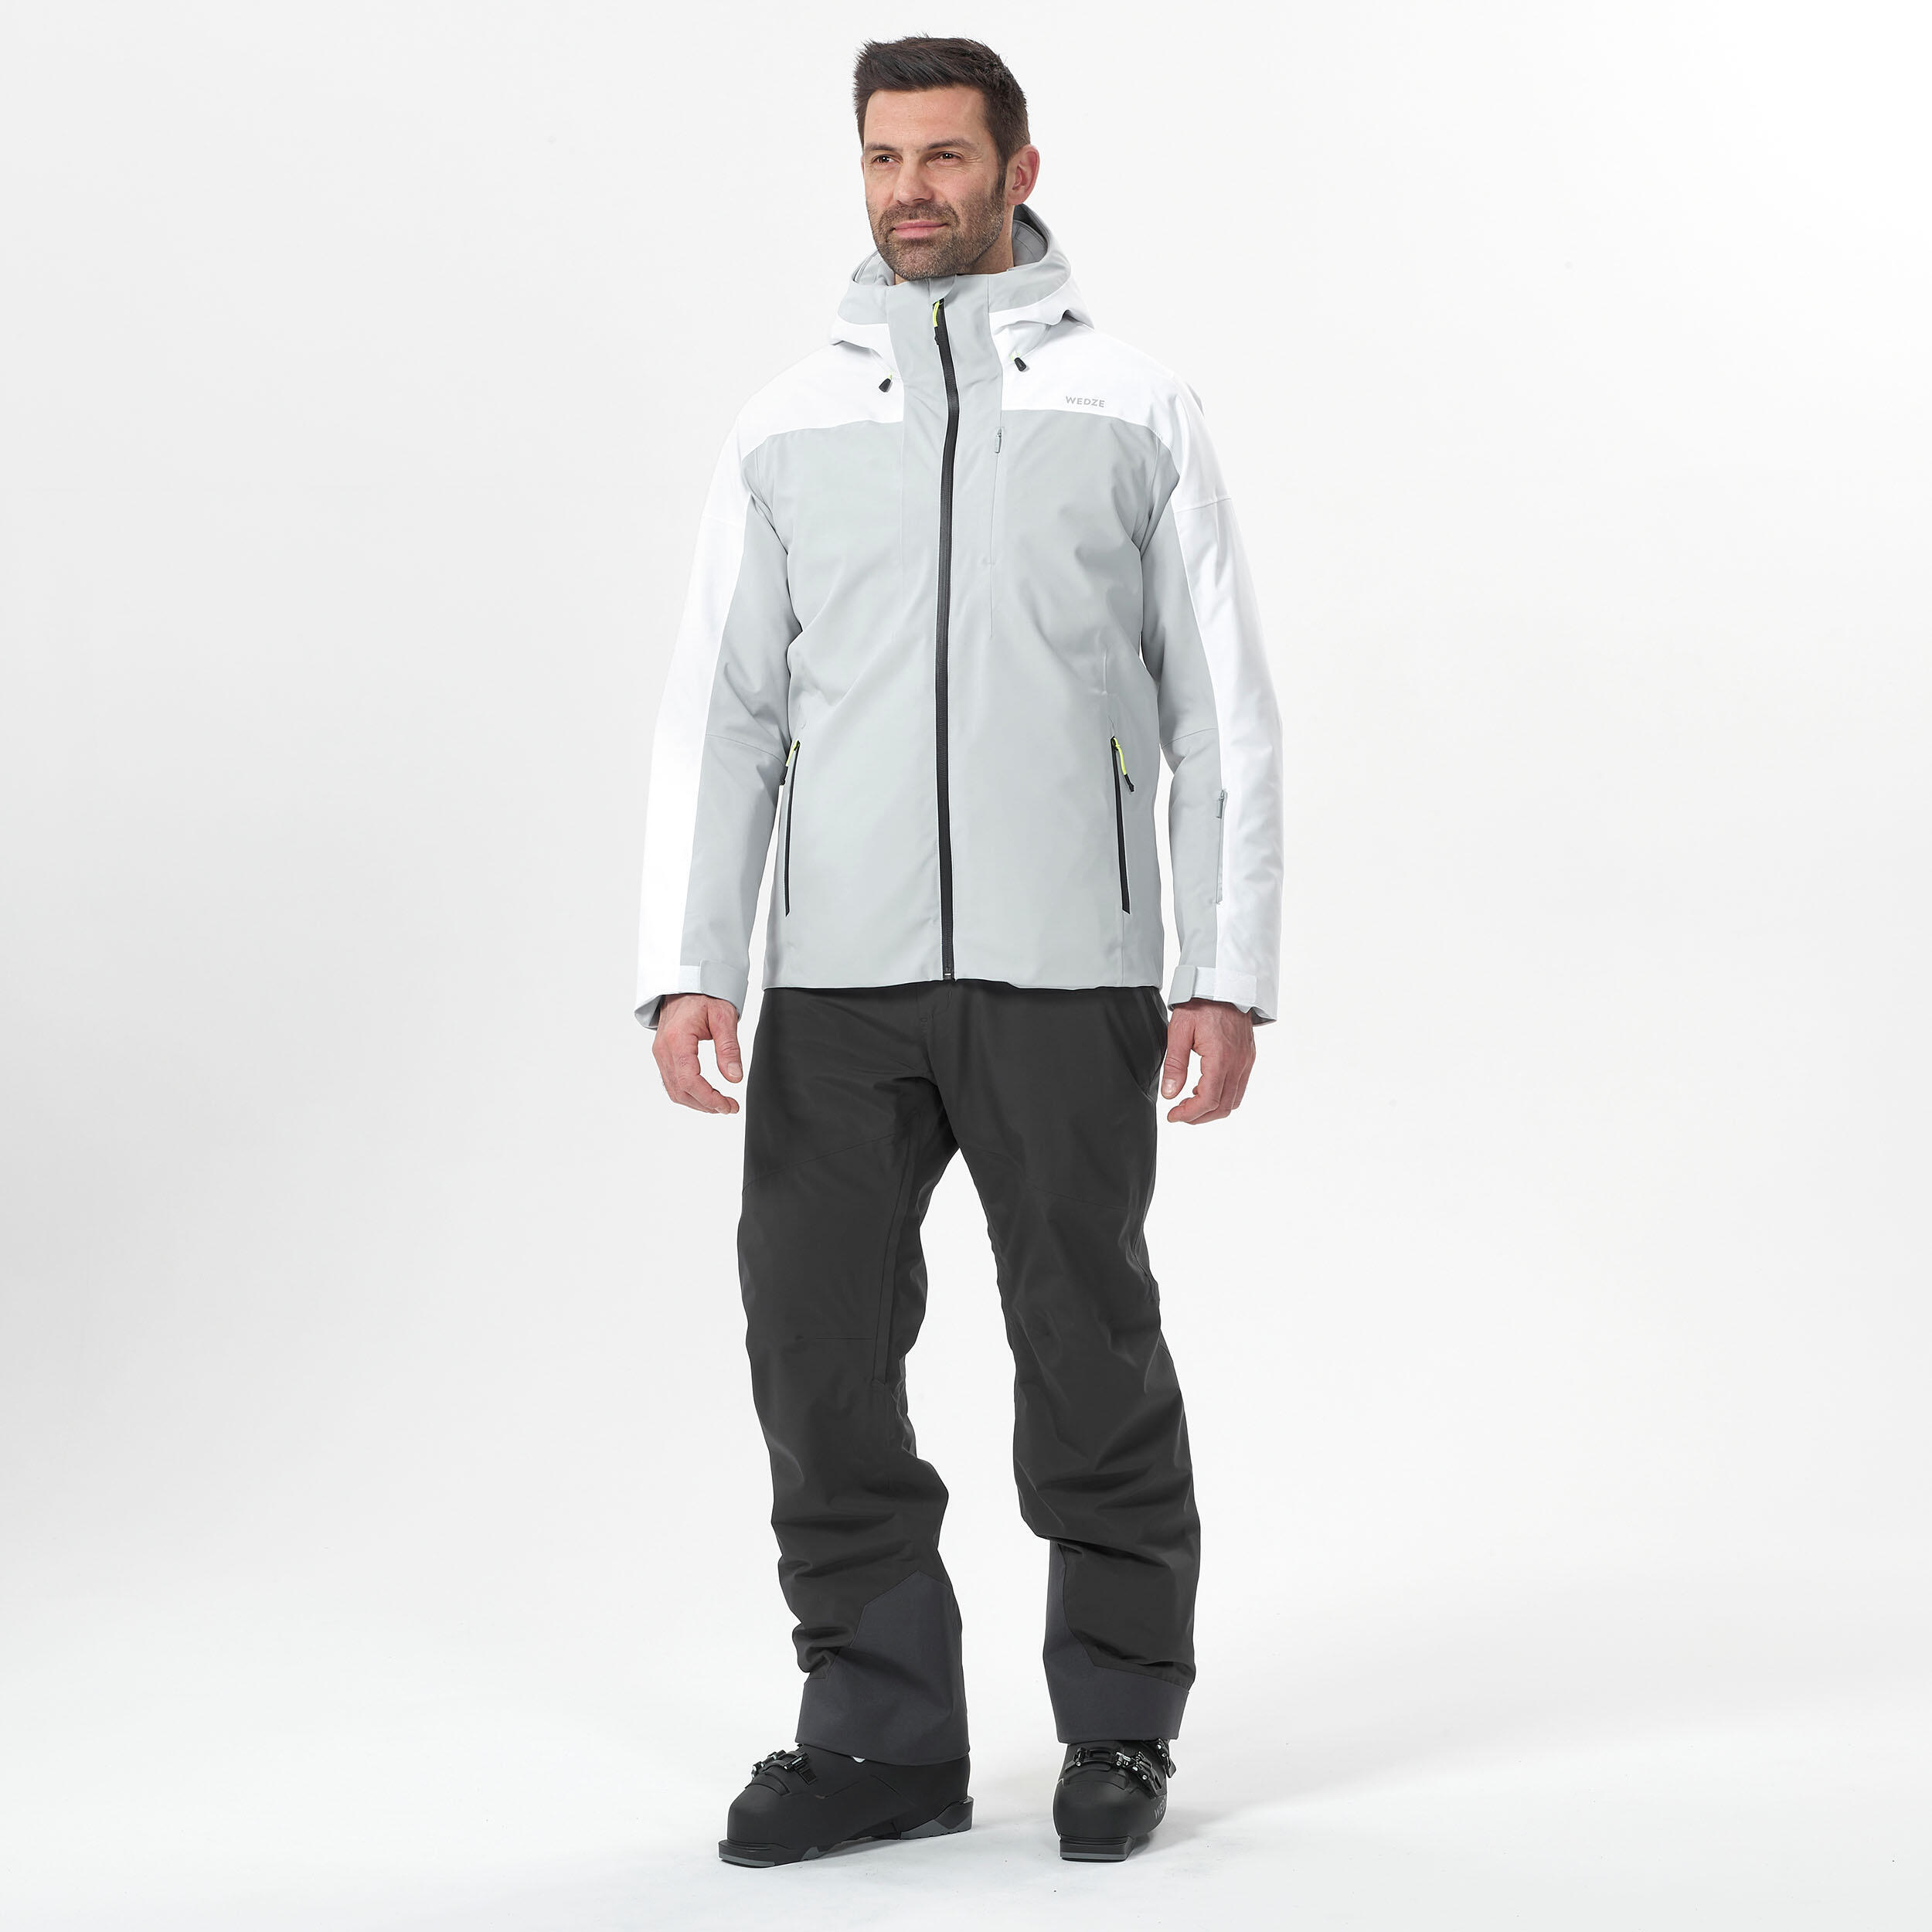 Men’s Warm Ski Jacket 500 - Grey/White 4/10